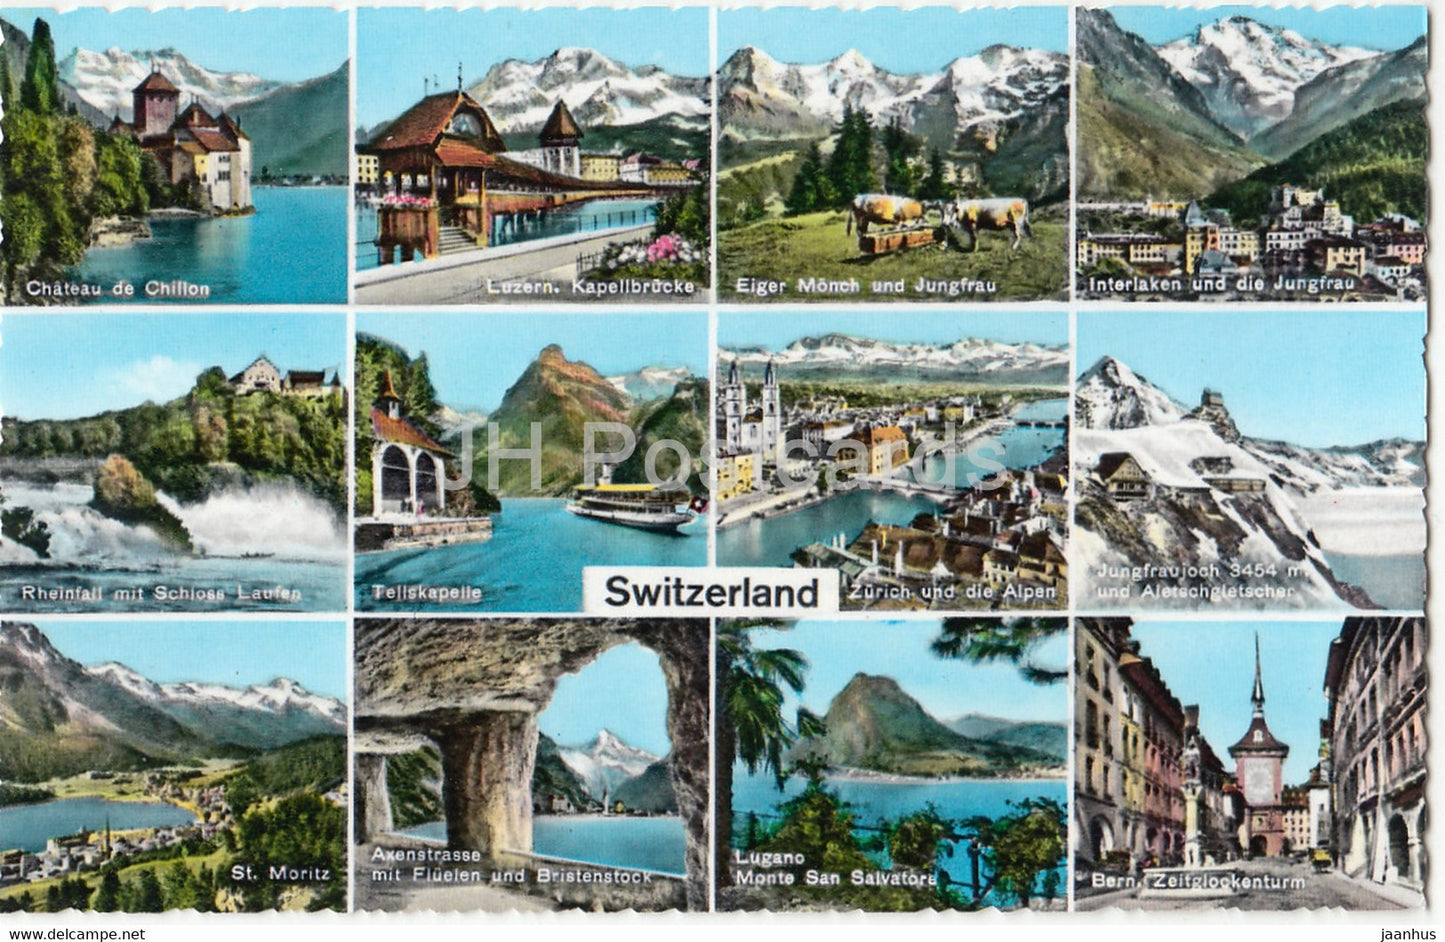 Switzerland - Chateau de Chillon - Luzern - Kapellbrucke - Eiger Monch - multiview - 322 - Switzerland - unused - JH Postcards